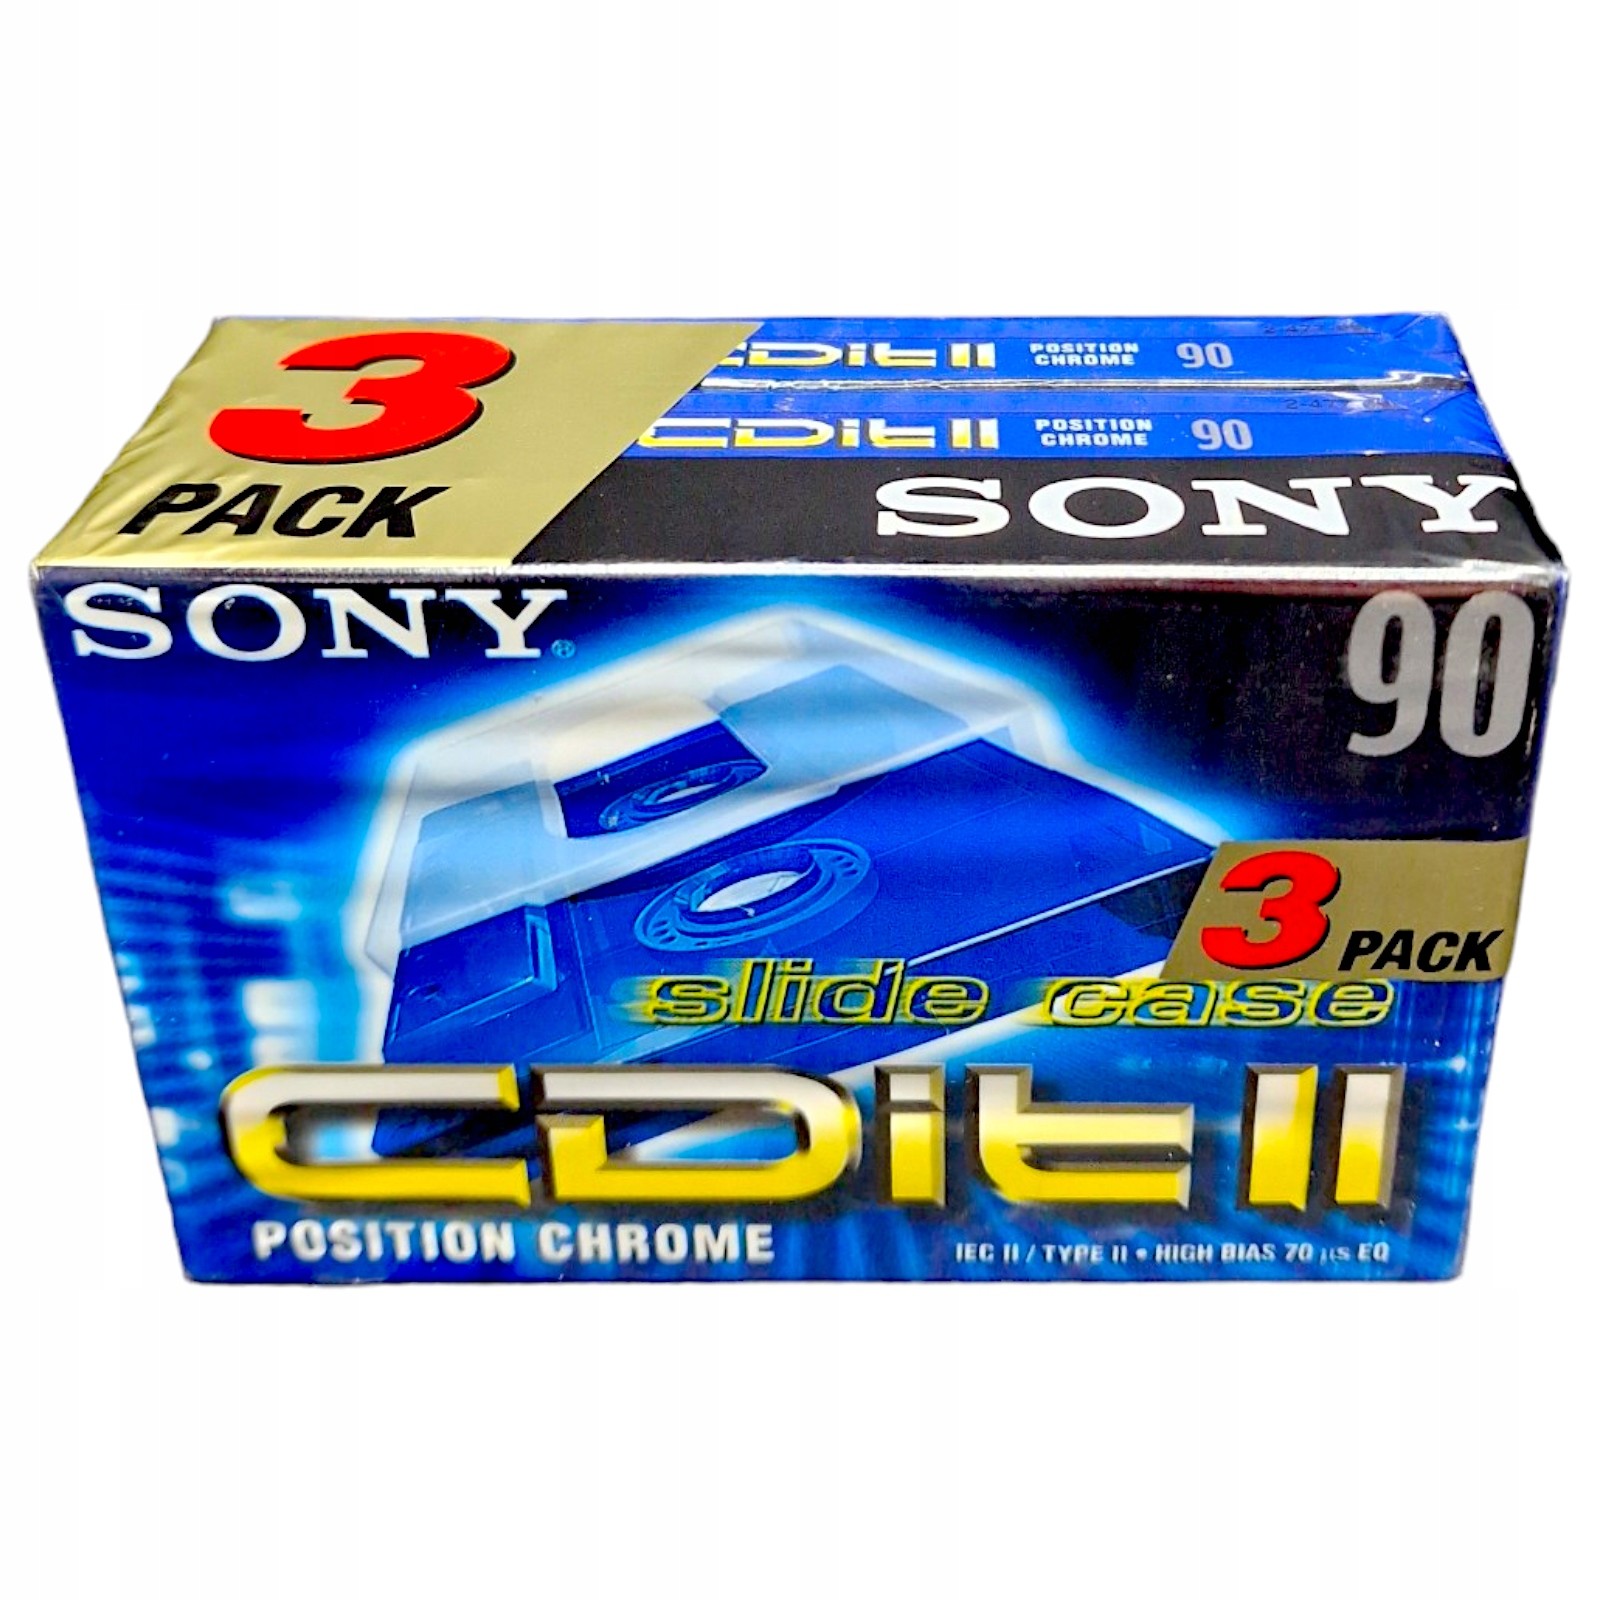 3x Nová Sony CDit II 90 Position Chrone 3pack